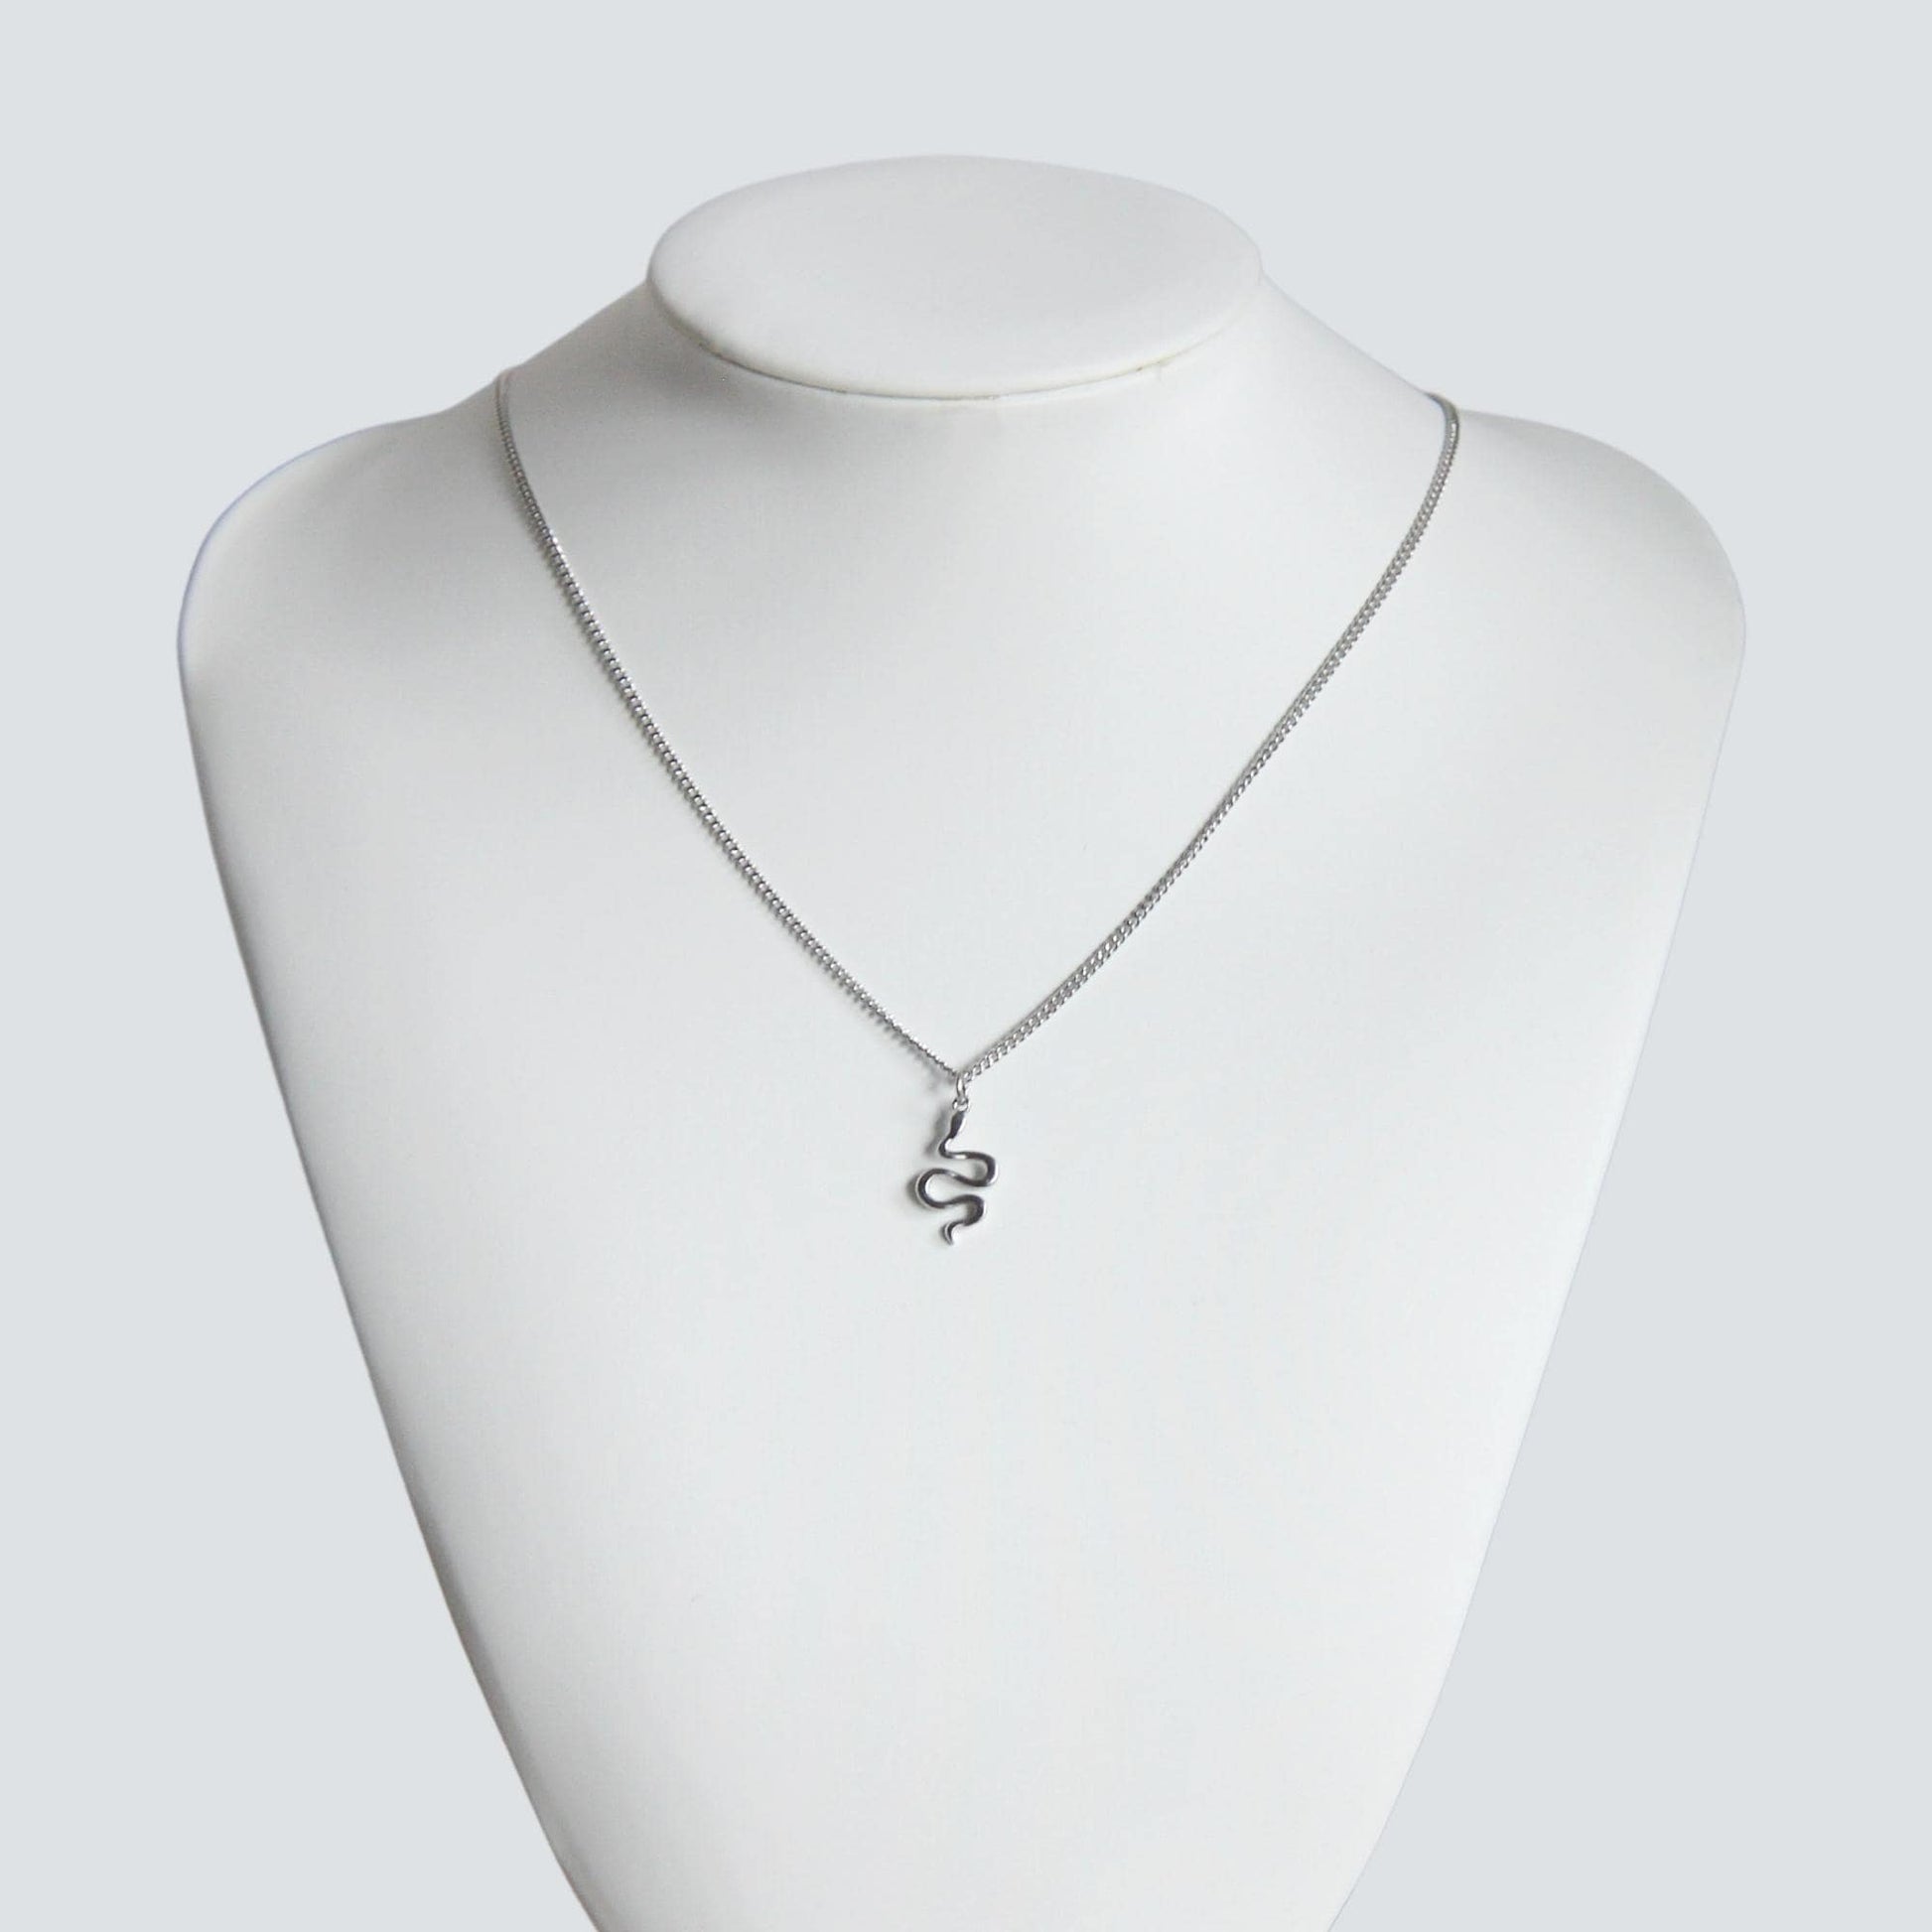 Silver Snake Pendant Necklace For Men or Women